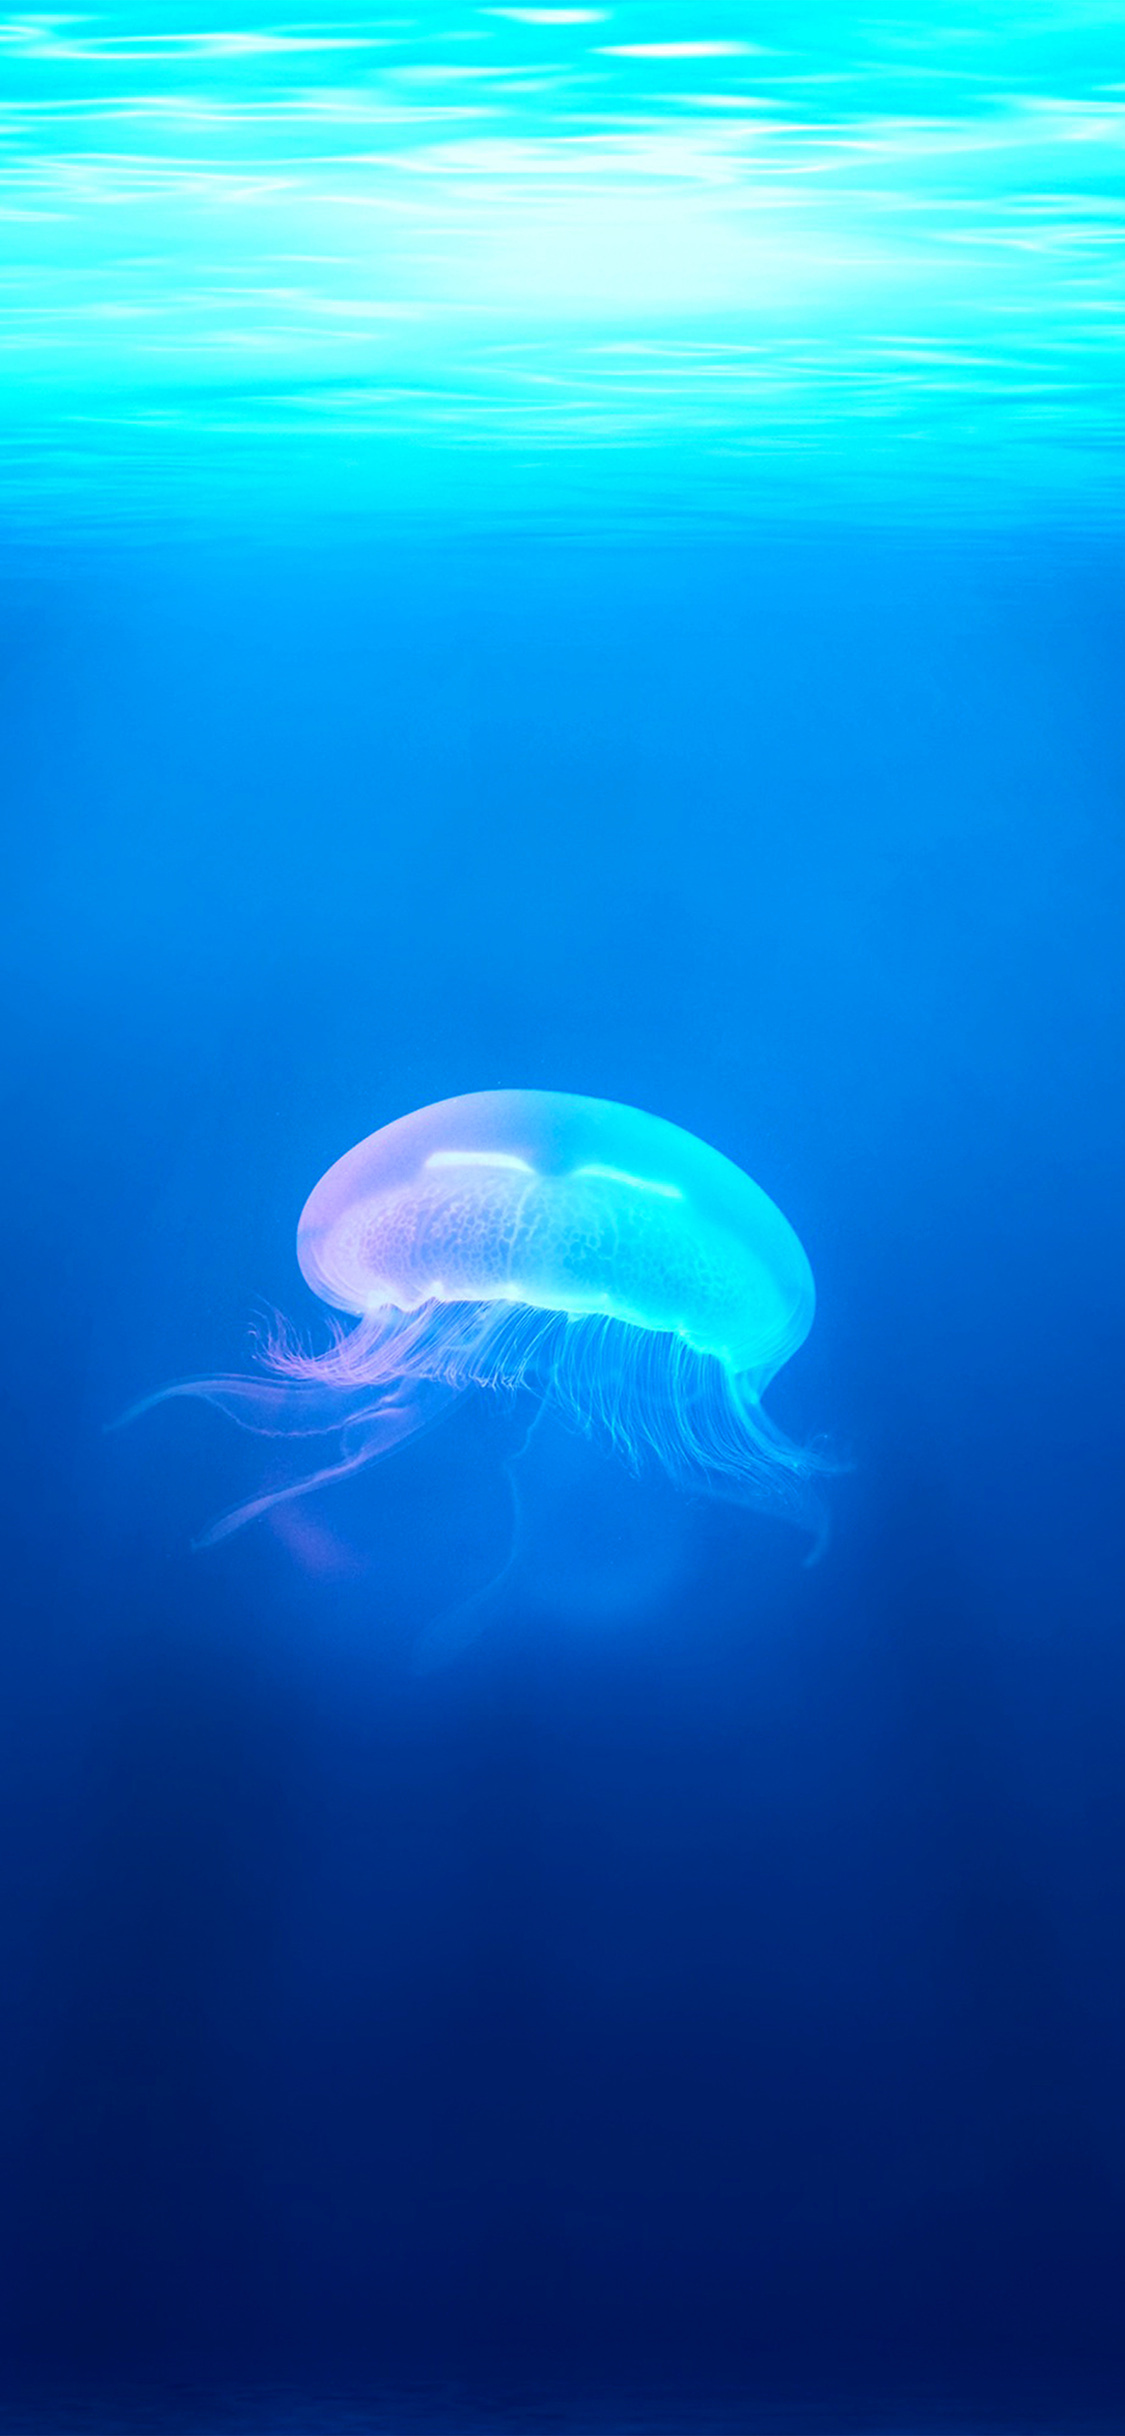 iPhone X wallpaper. jellyfish sea ocean water blue animal